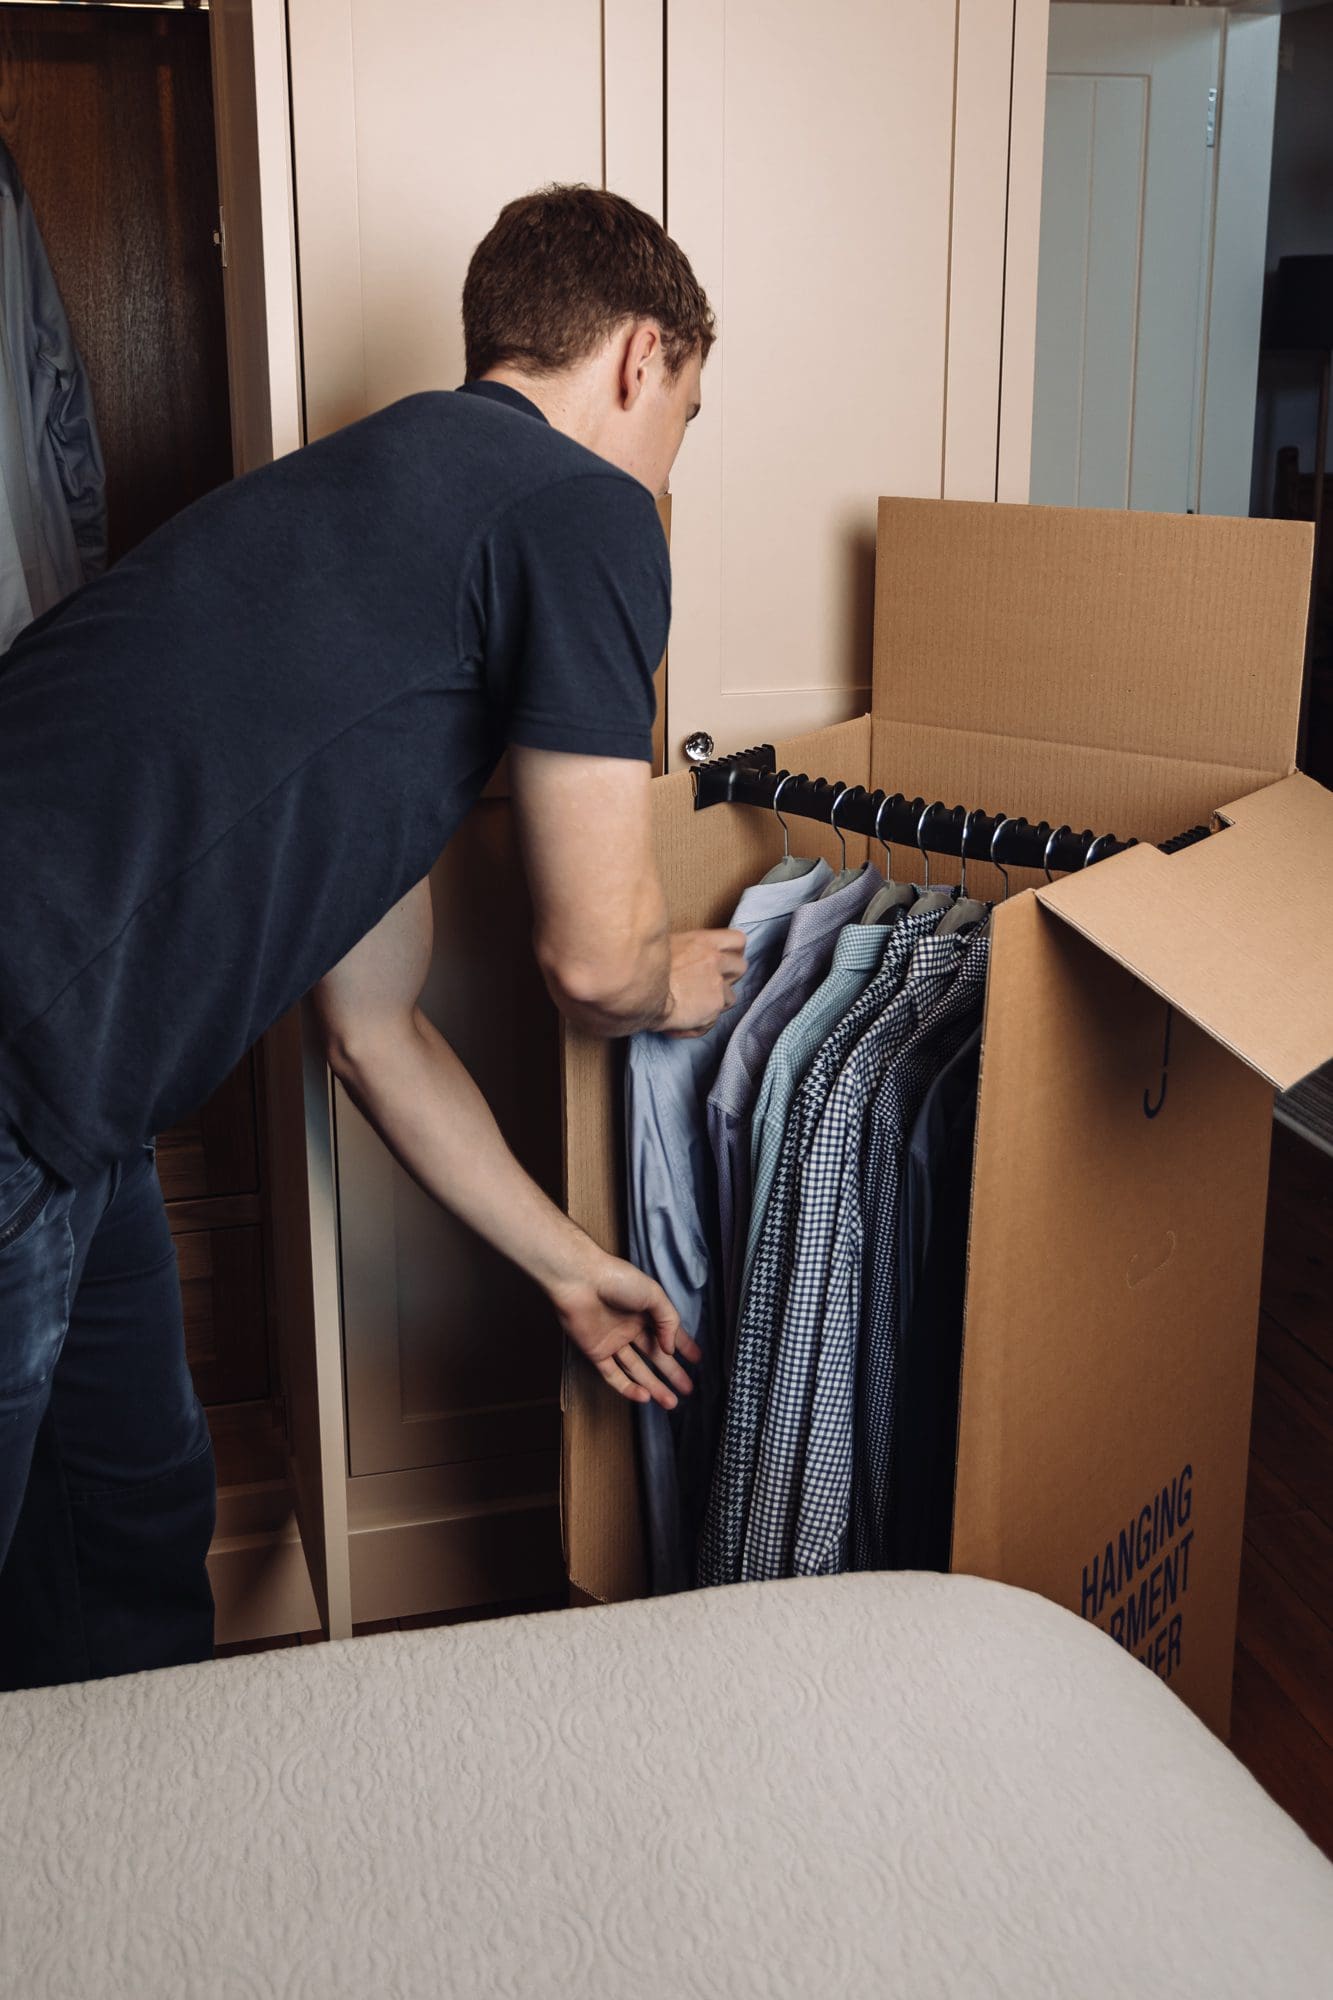 A man arranging clothes in a box